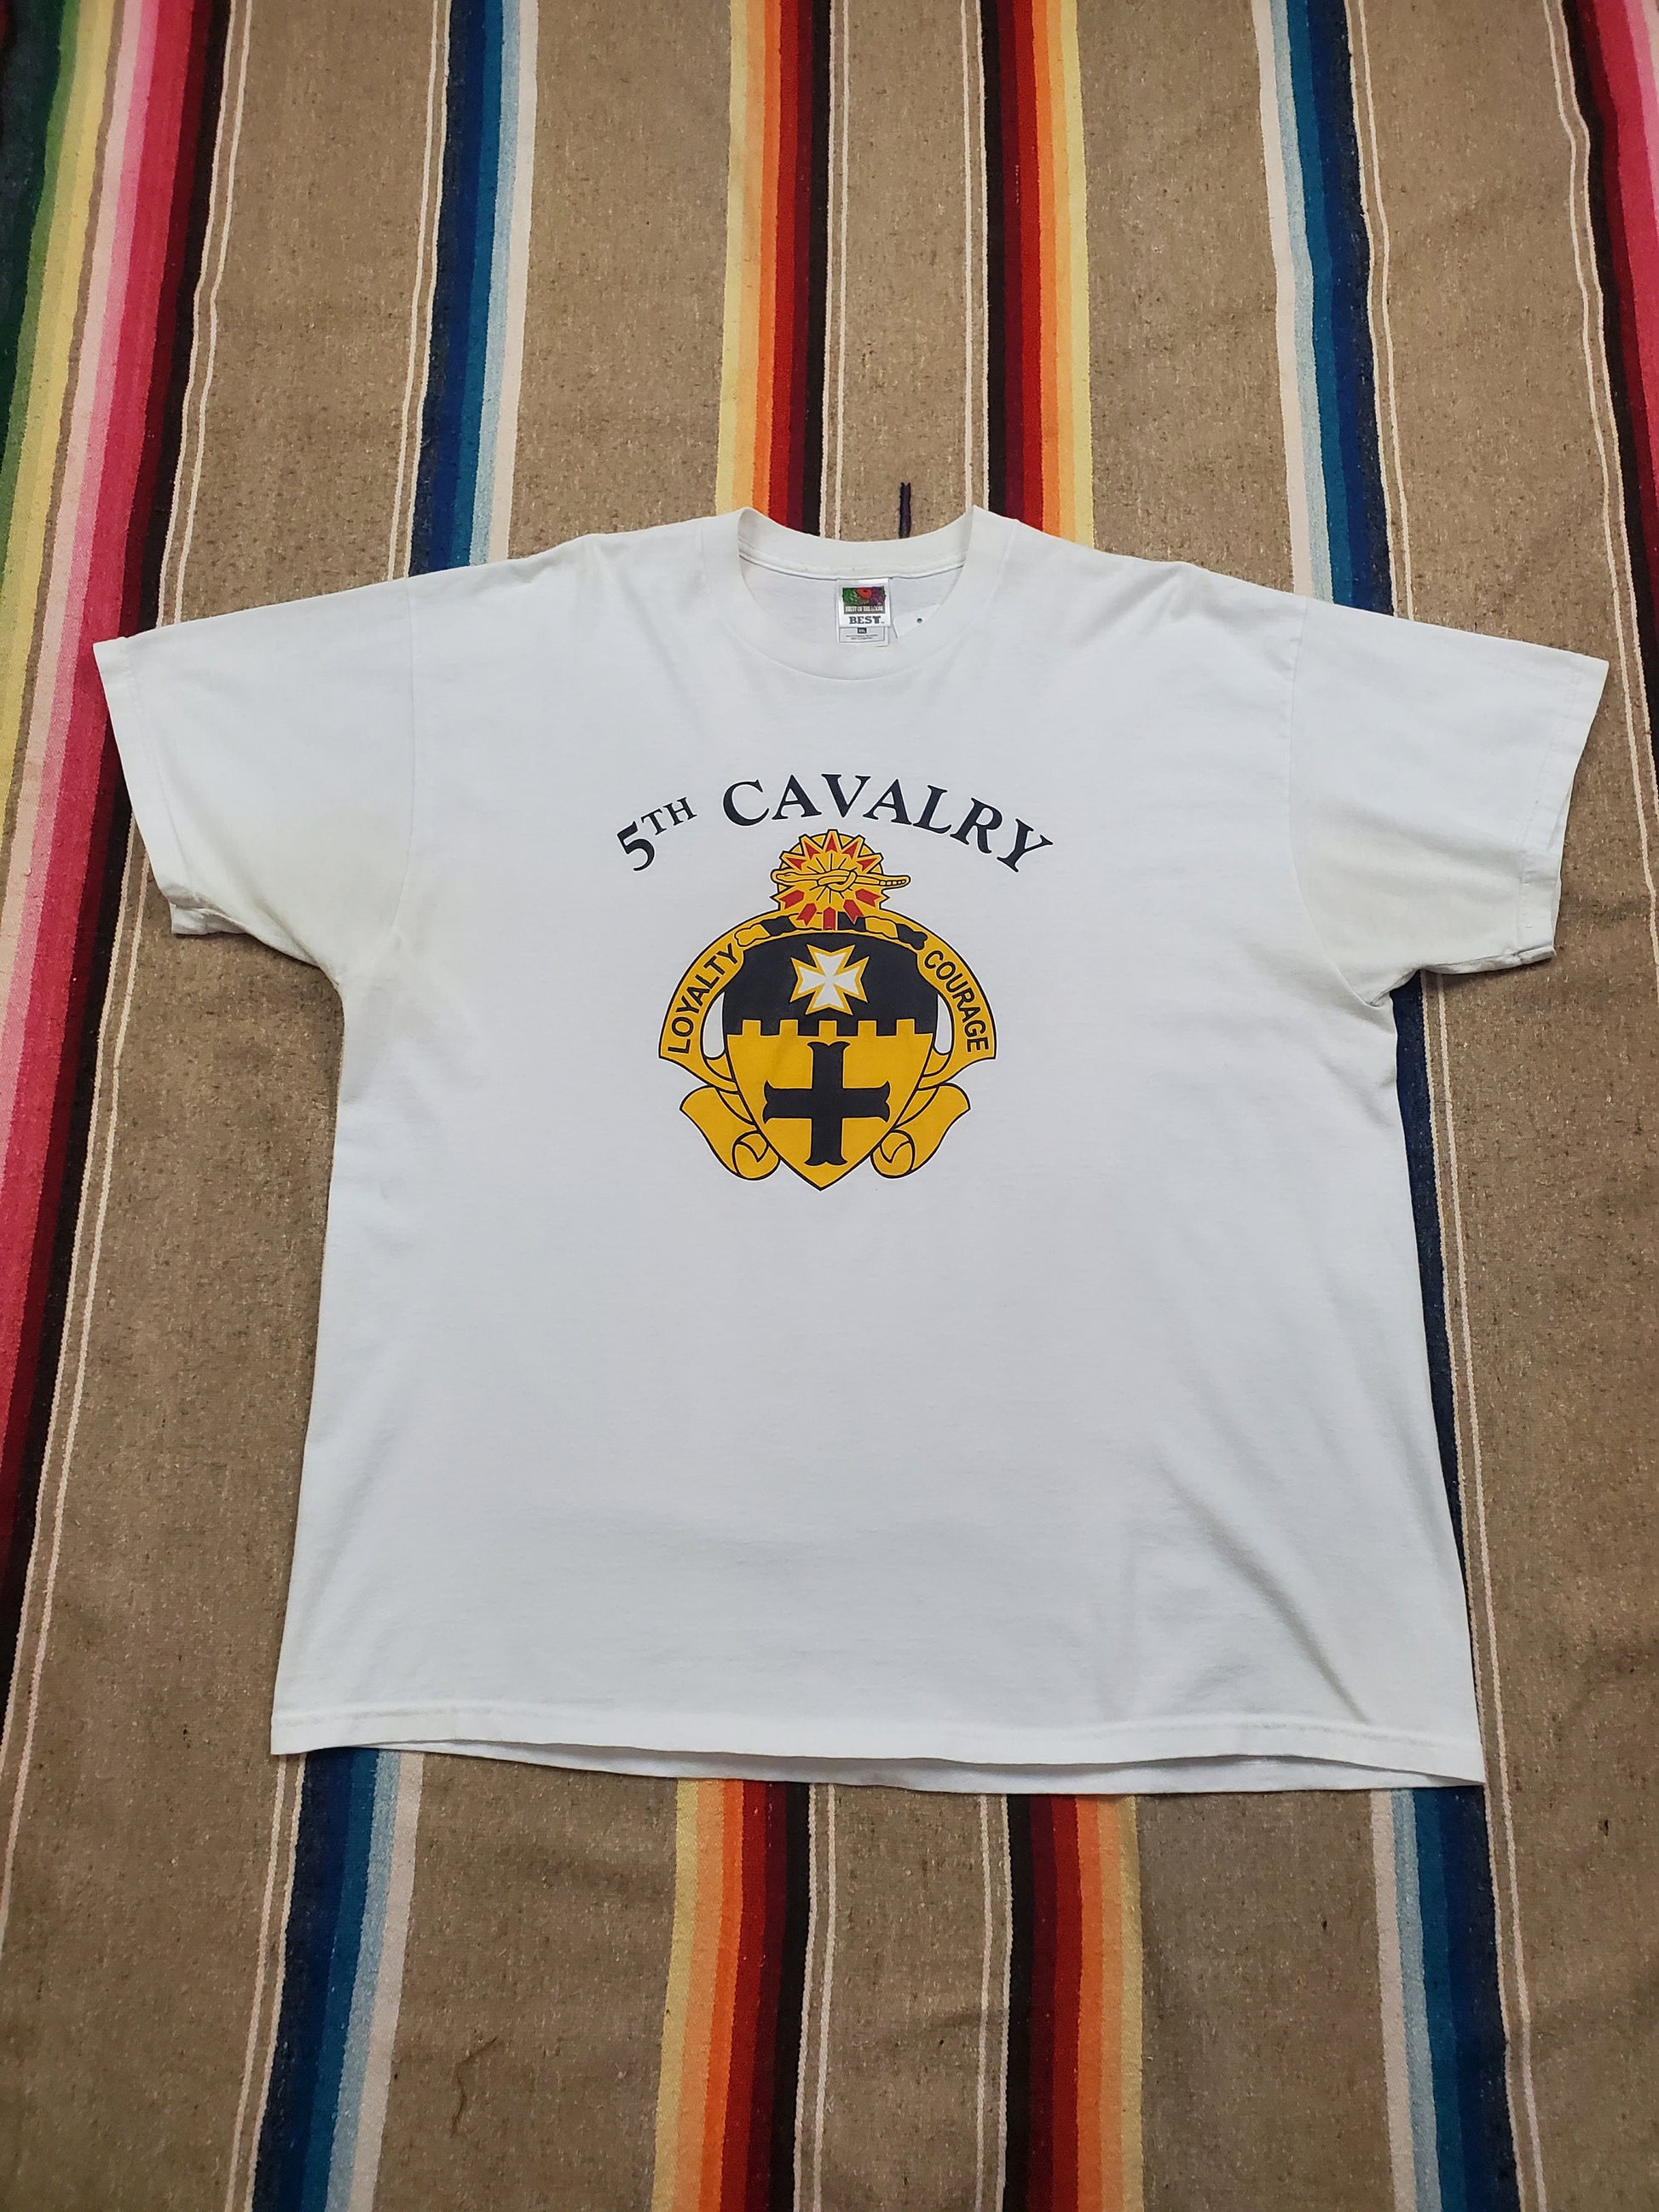 1990s/2000s 5th Cavalry T-Shirt Size XL/XXL